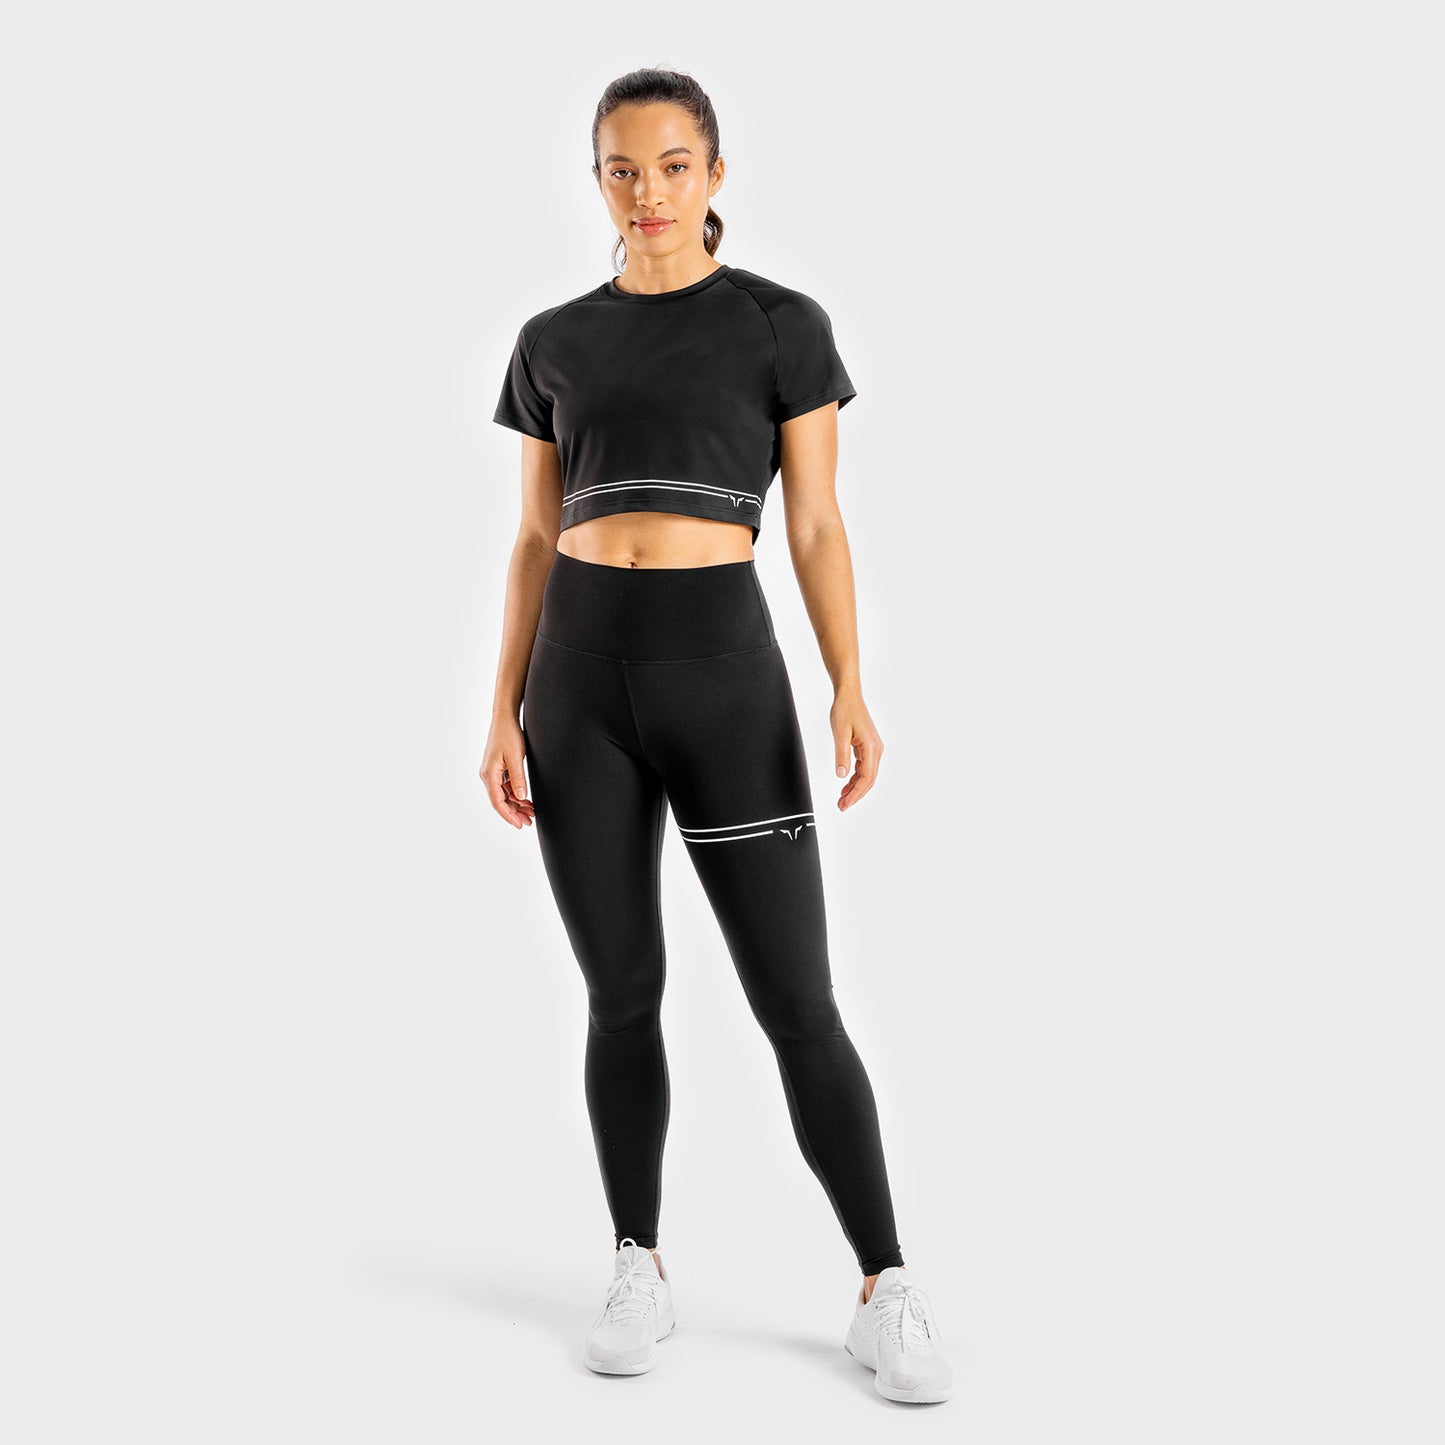 squatwolf-workout-clothes-flux-leggings-black-gym-leggings-for-women